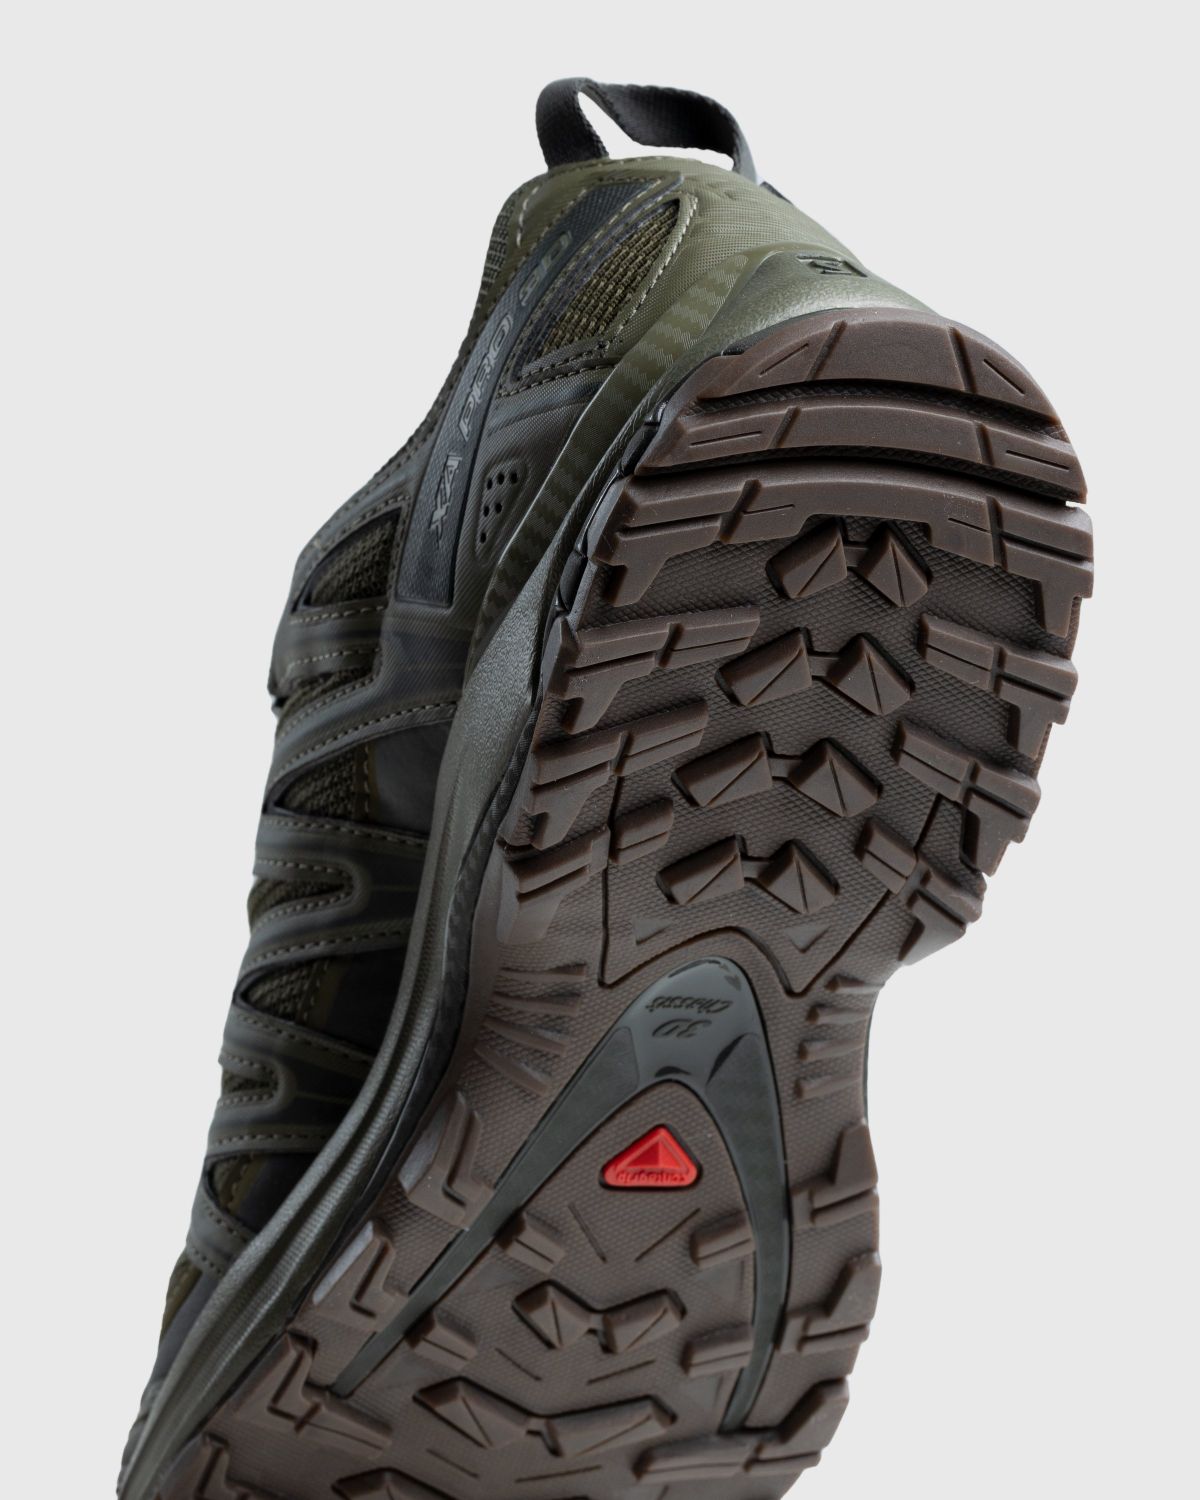 Salomon – XA Pro 3D Olive Night/Peat - Sneakers - Black - Image 6